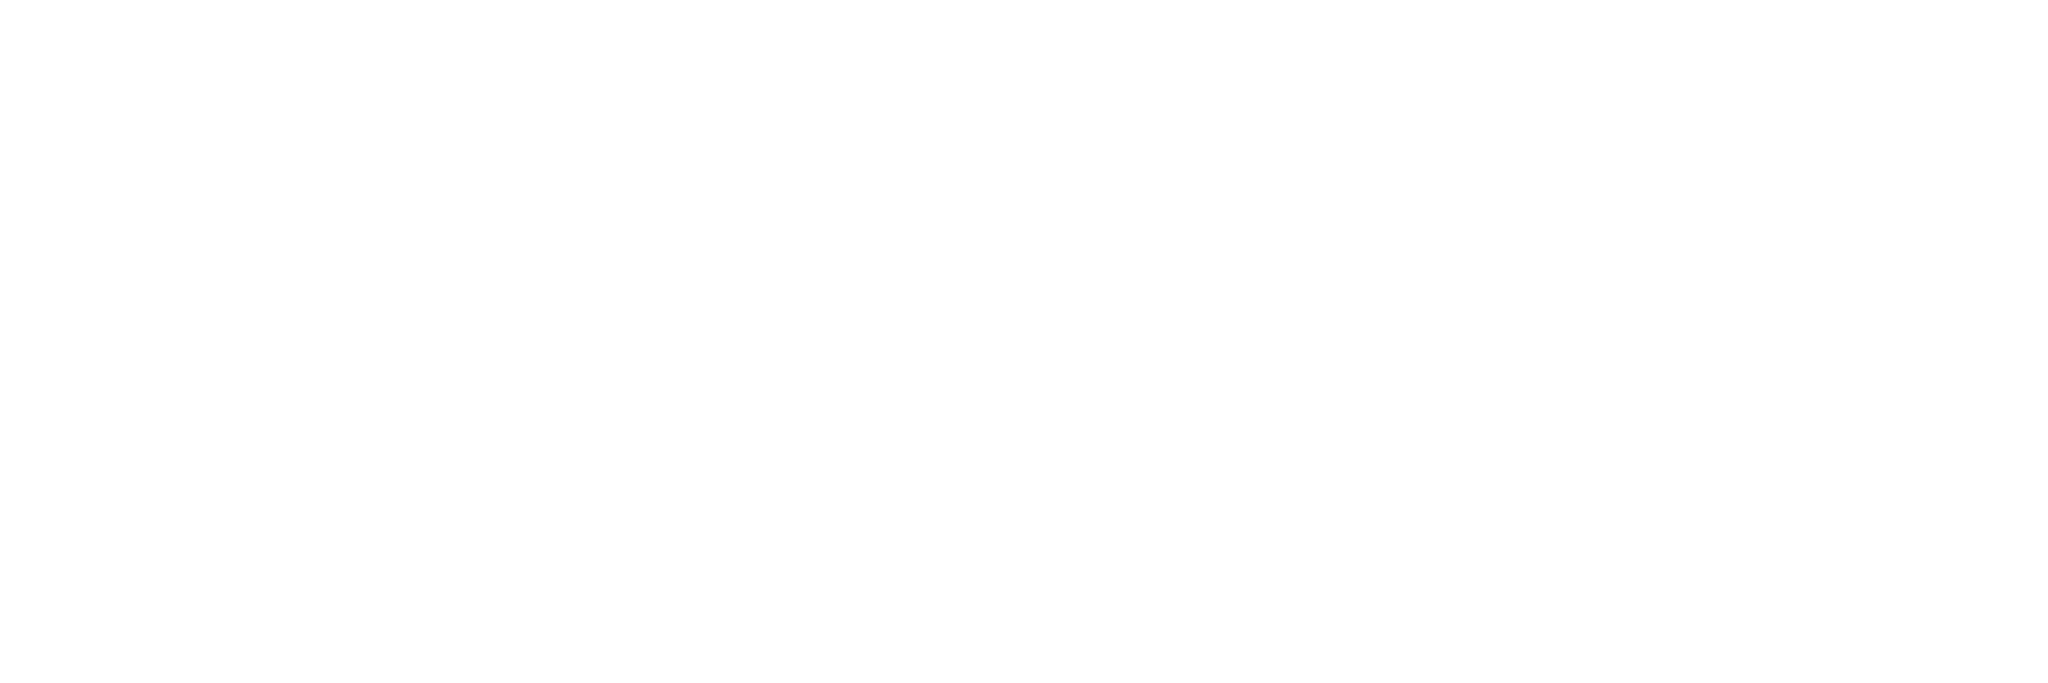 logo Kominfo